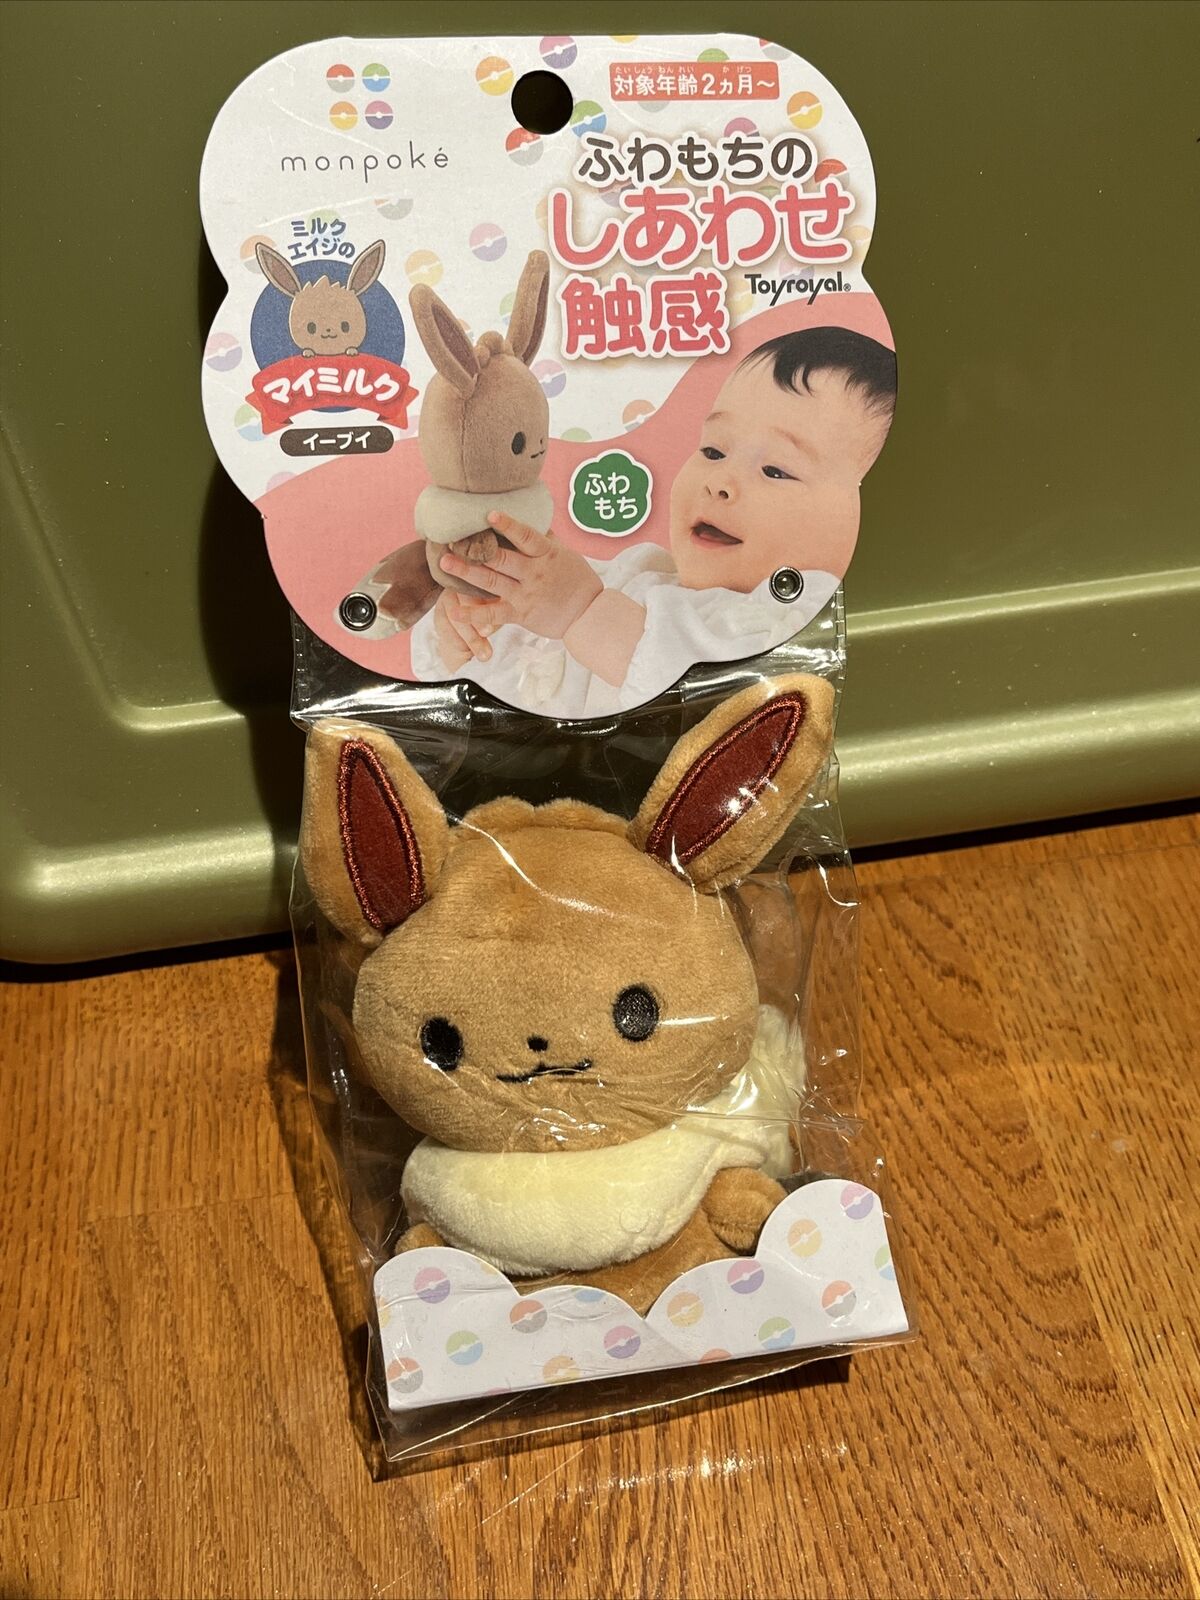 Pokemon Baby Plush Toy monpoke Eevee Japan import NEW Pocket Monster